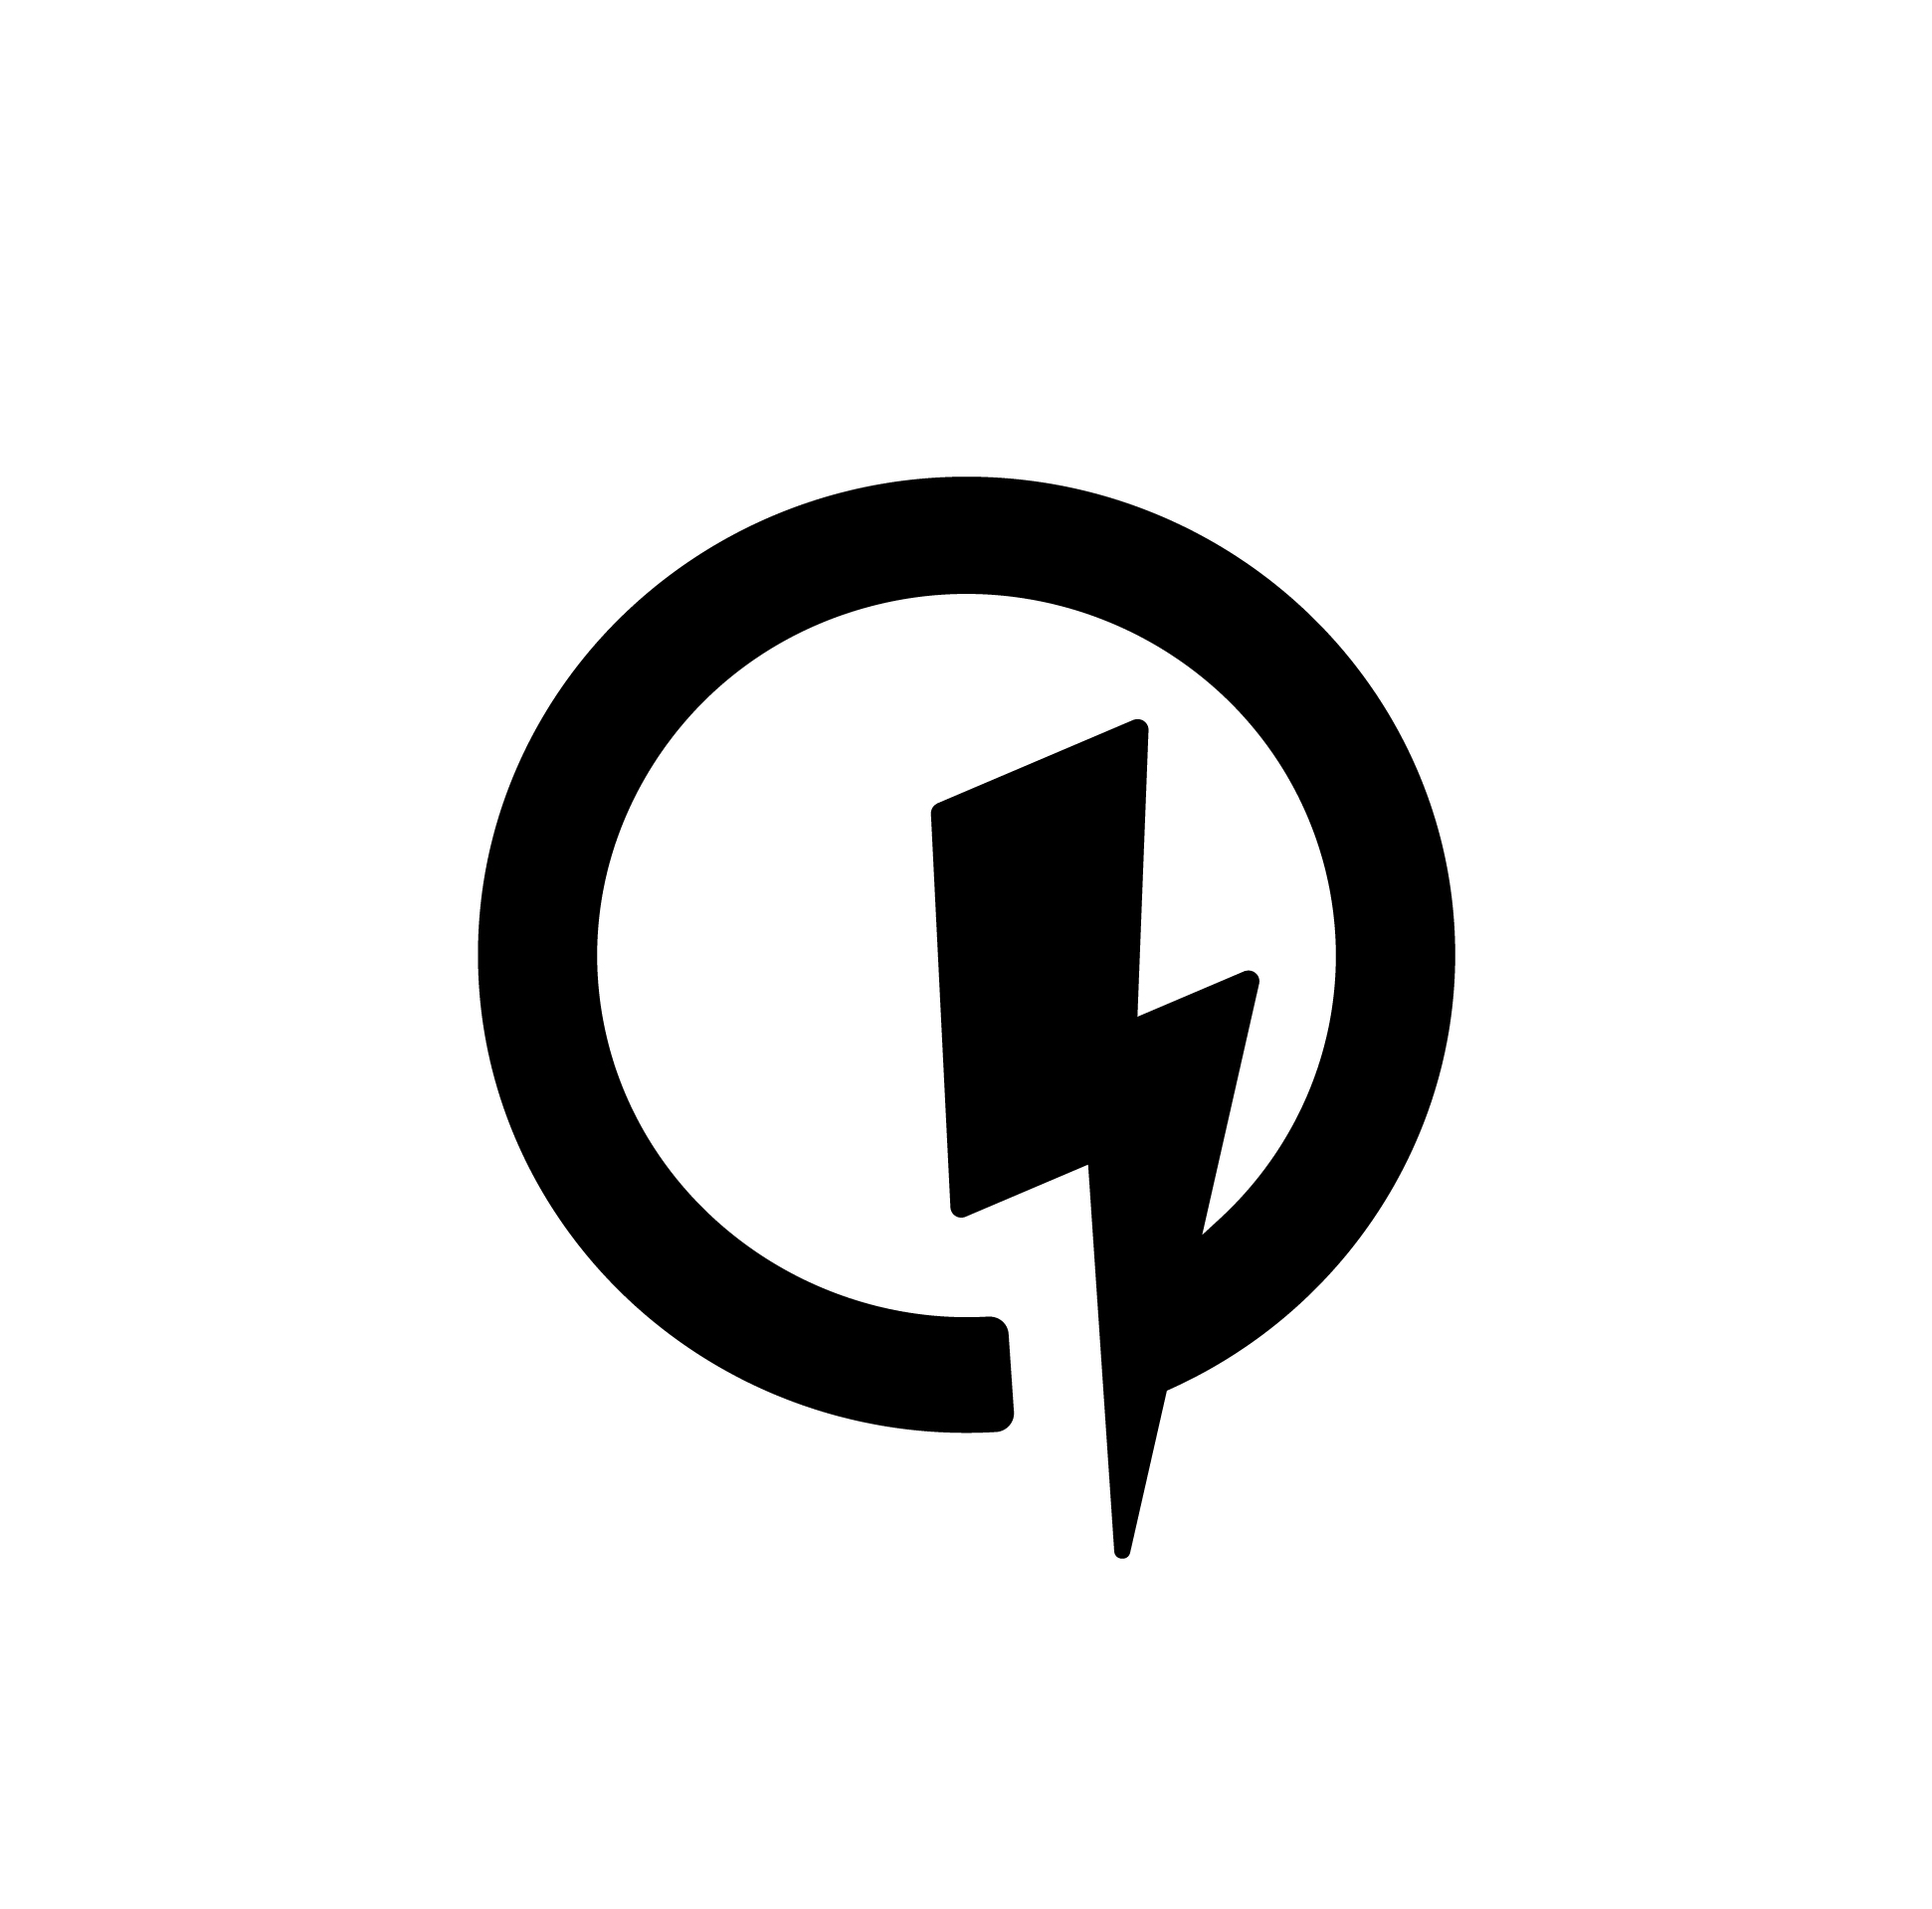 00 003. Логотип Qualcomm quick charge. Quick charge 3.0 лого. Qualcomm quick charge 3.0 иконка. Быстрая зарядка логотип.